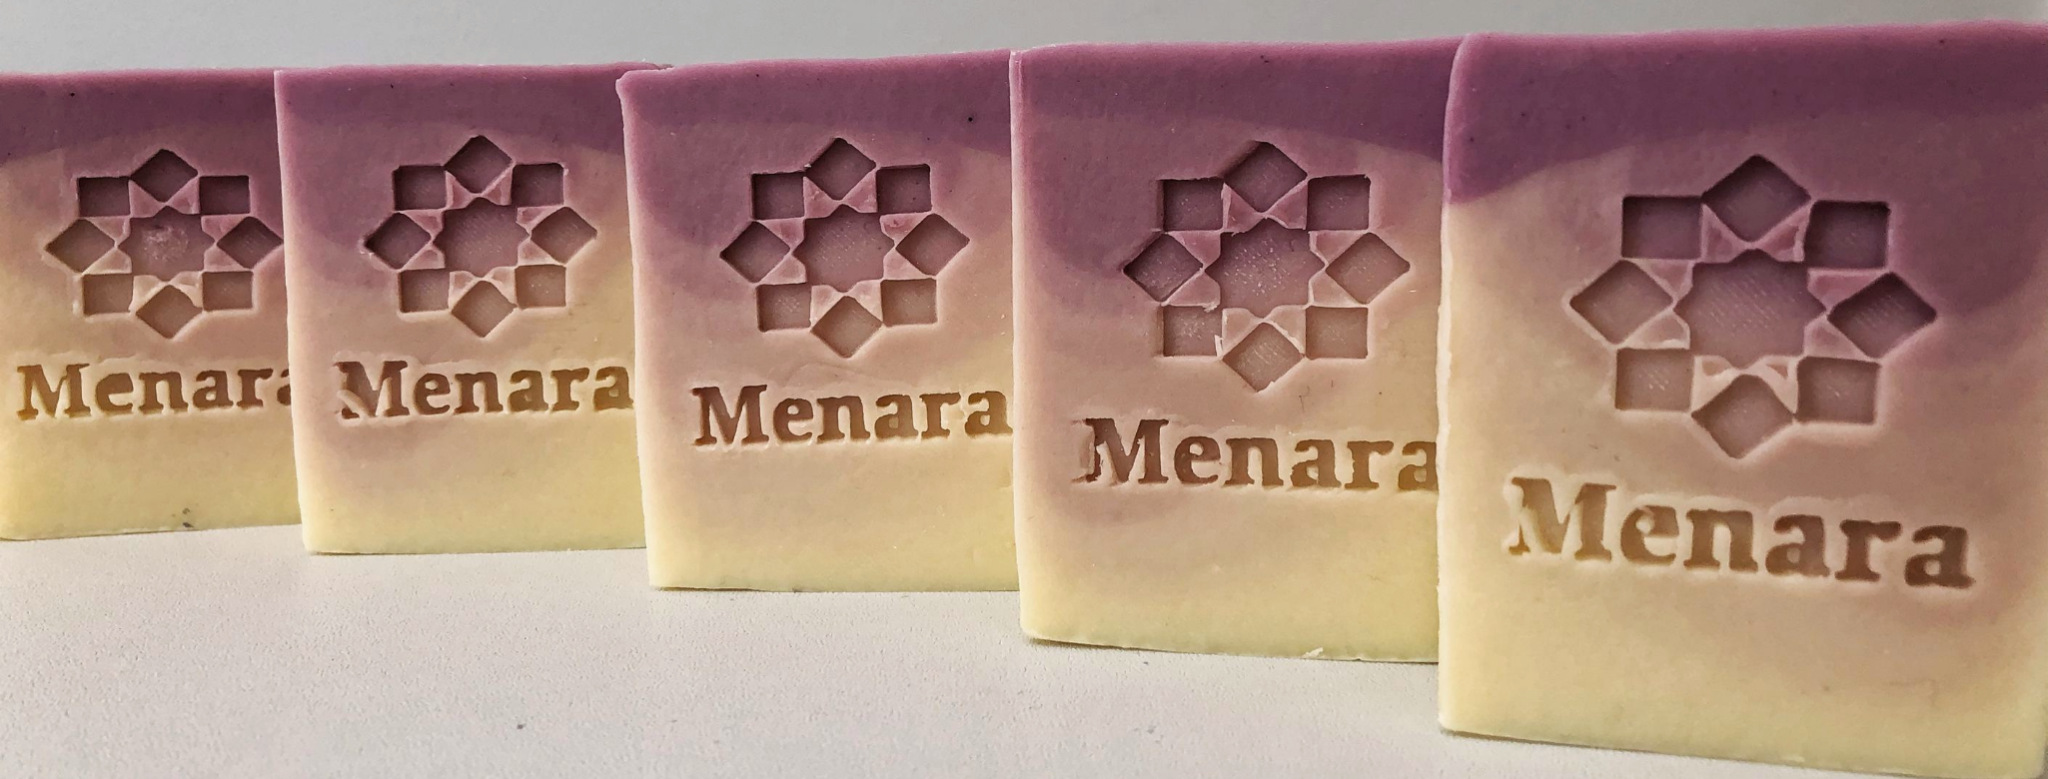 Menara Soaps: Luxurious Artisanal Bath Products